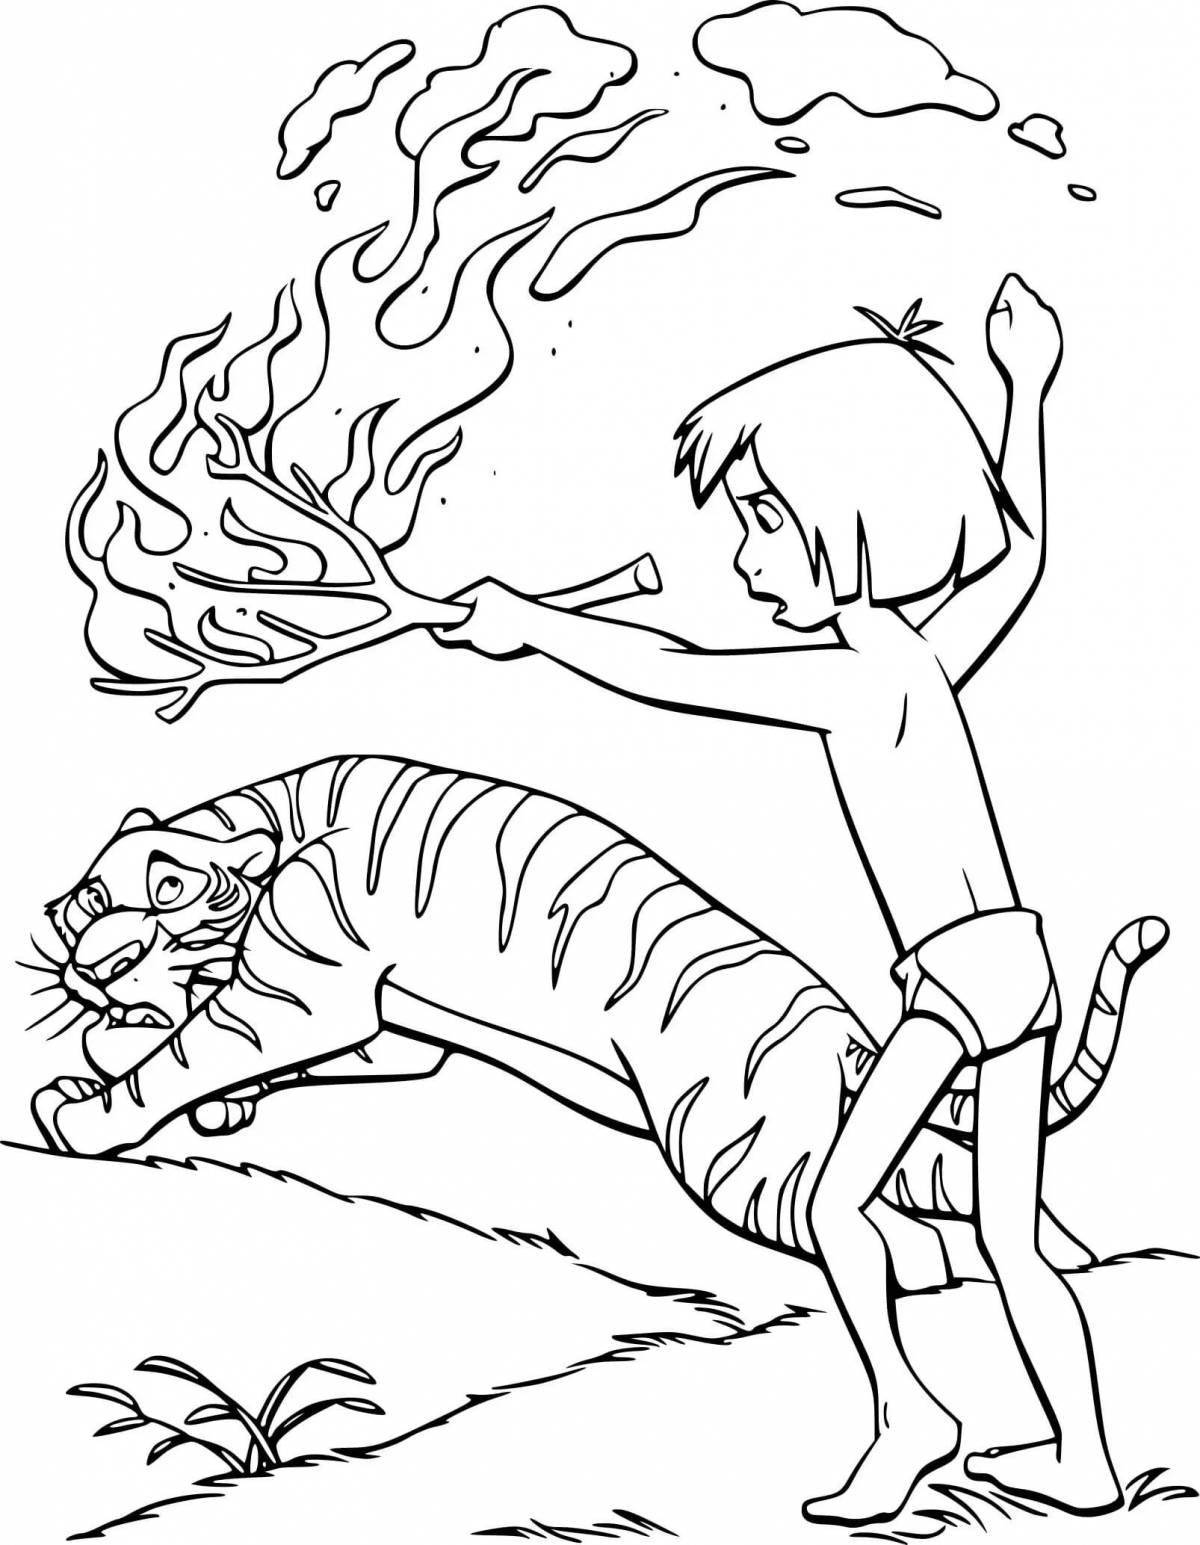 Mowgli's fun coloring book